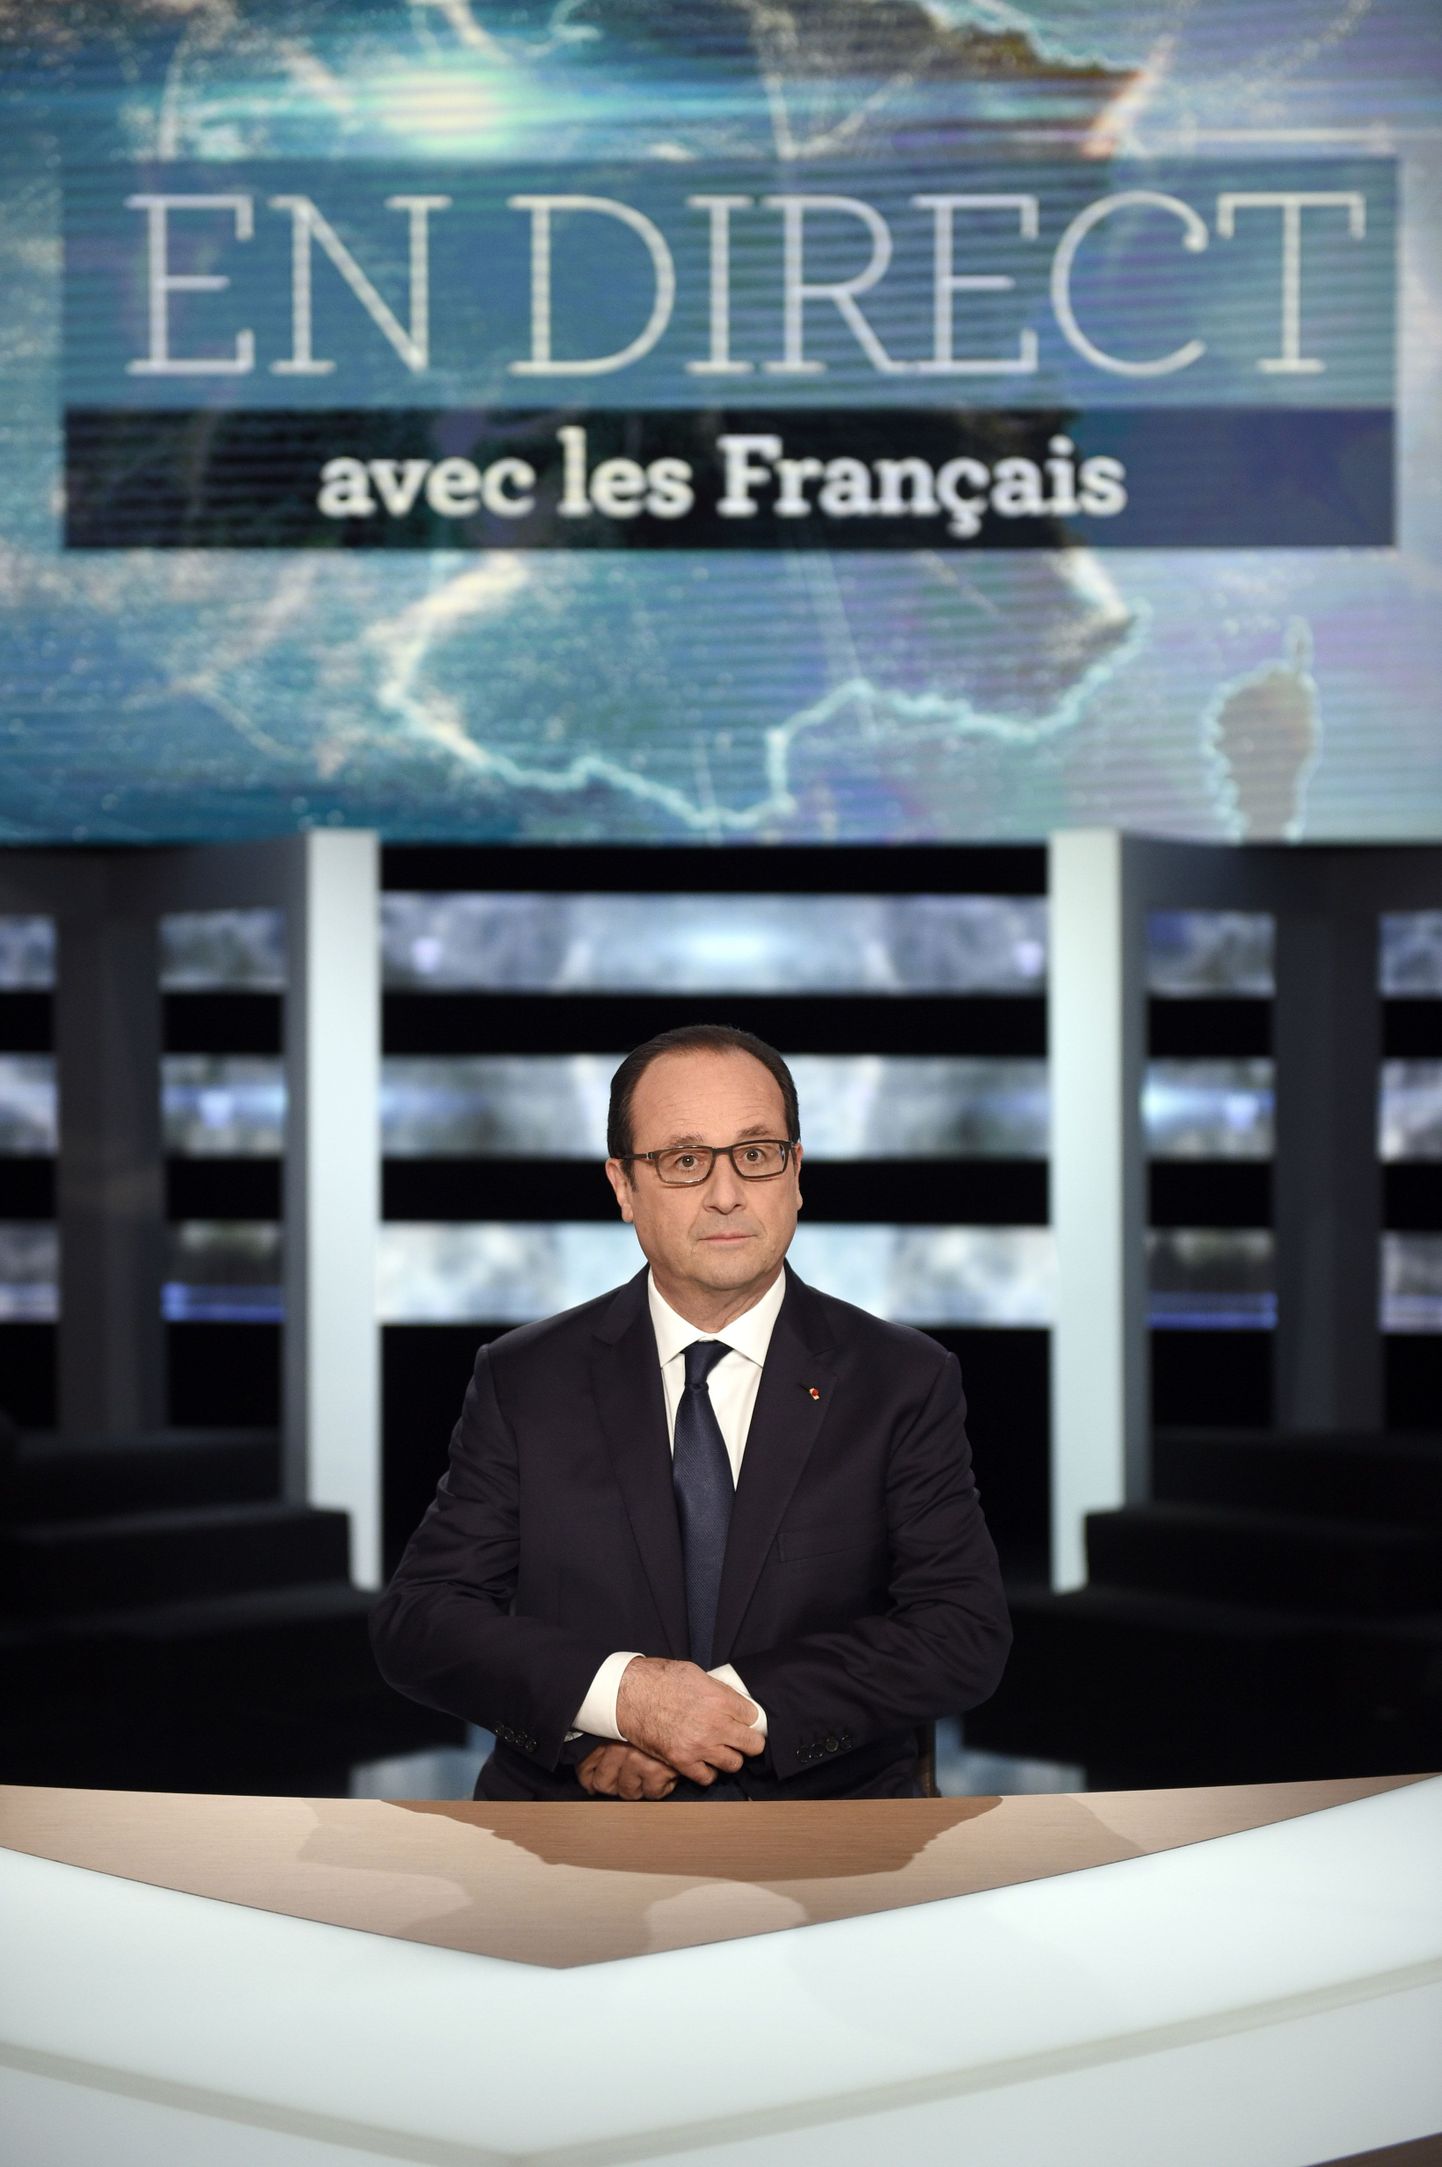 Prantsuse president Francois Hollande.